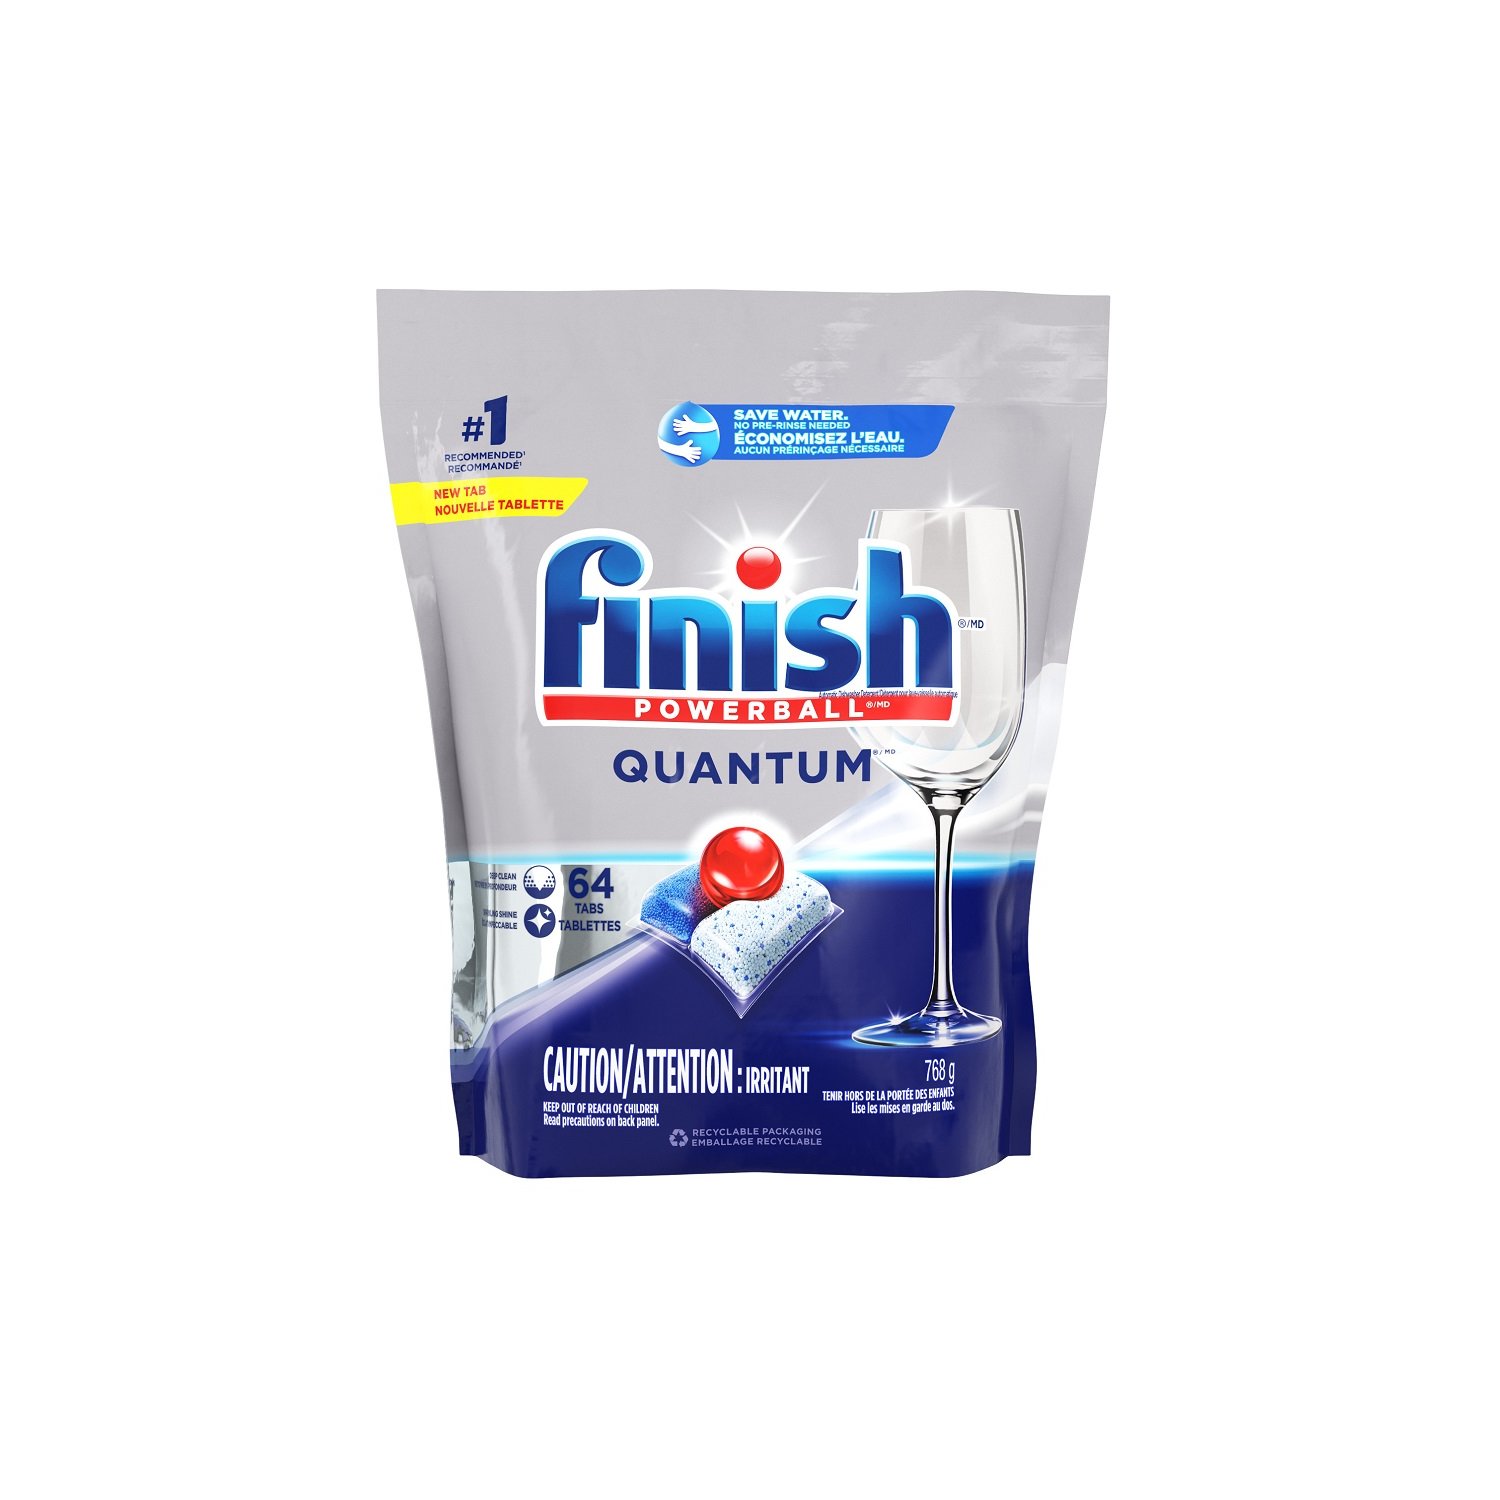 Finish - Jet Dry Dishwasher Cleaner - Urban Fare